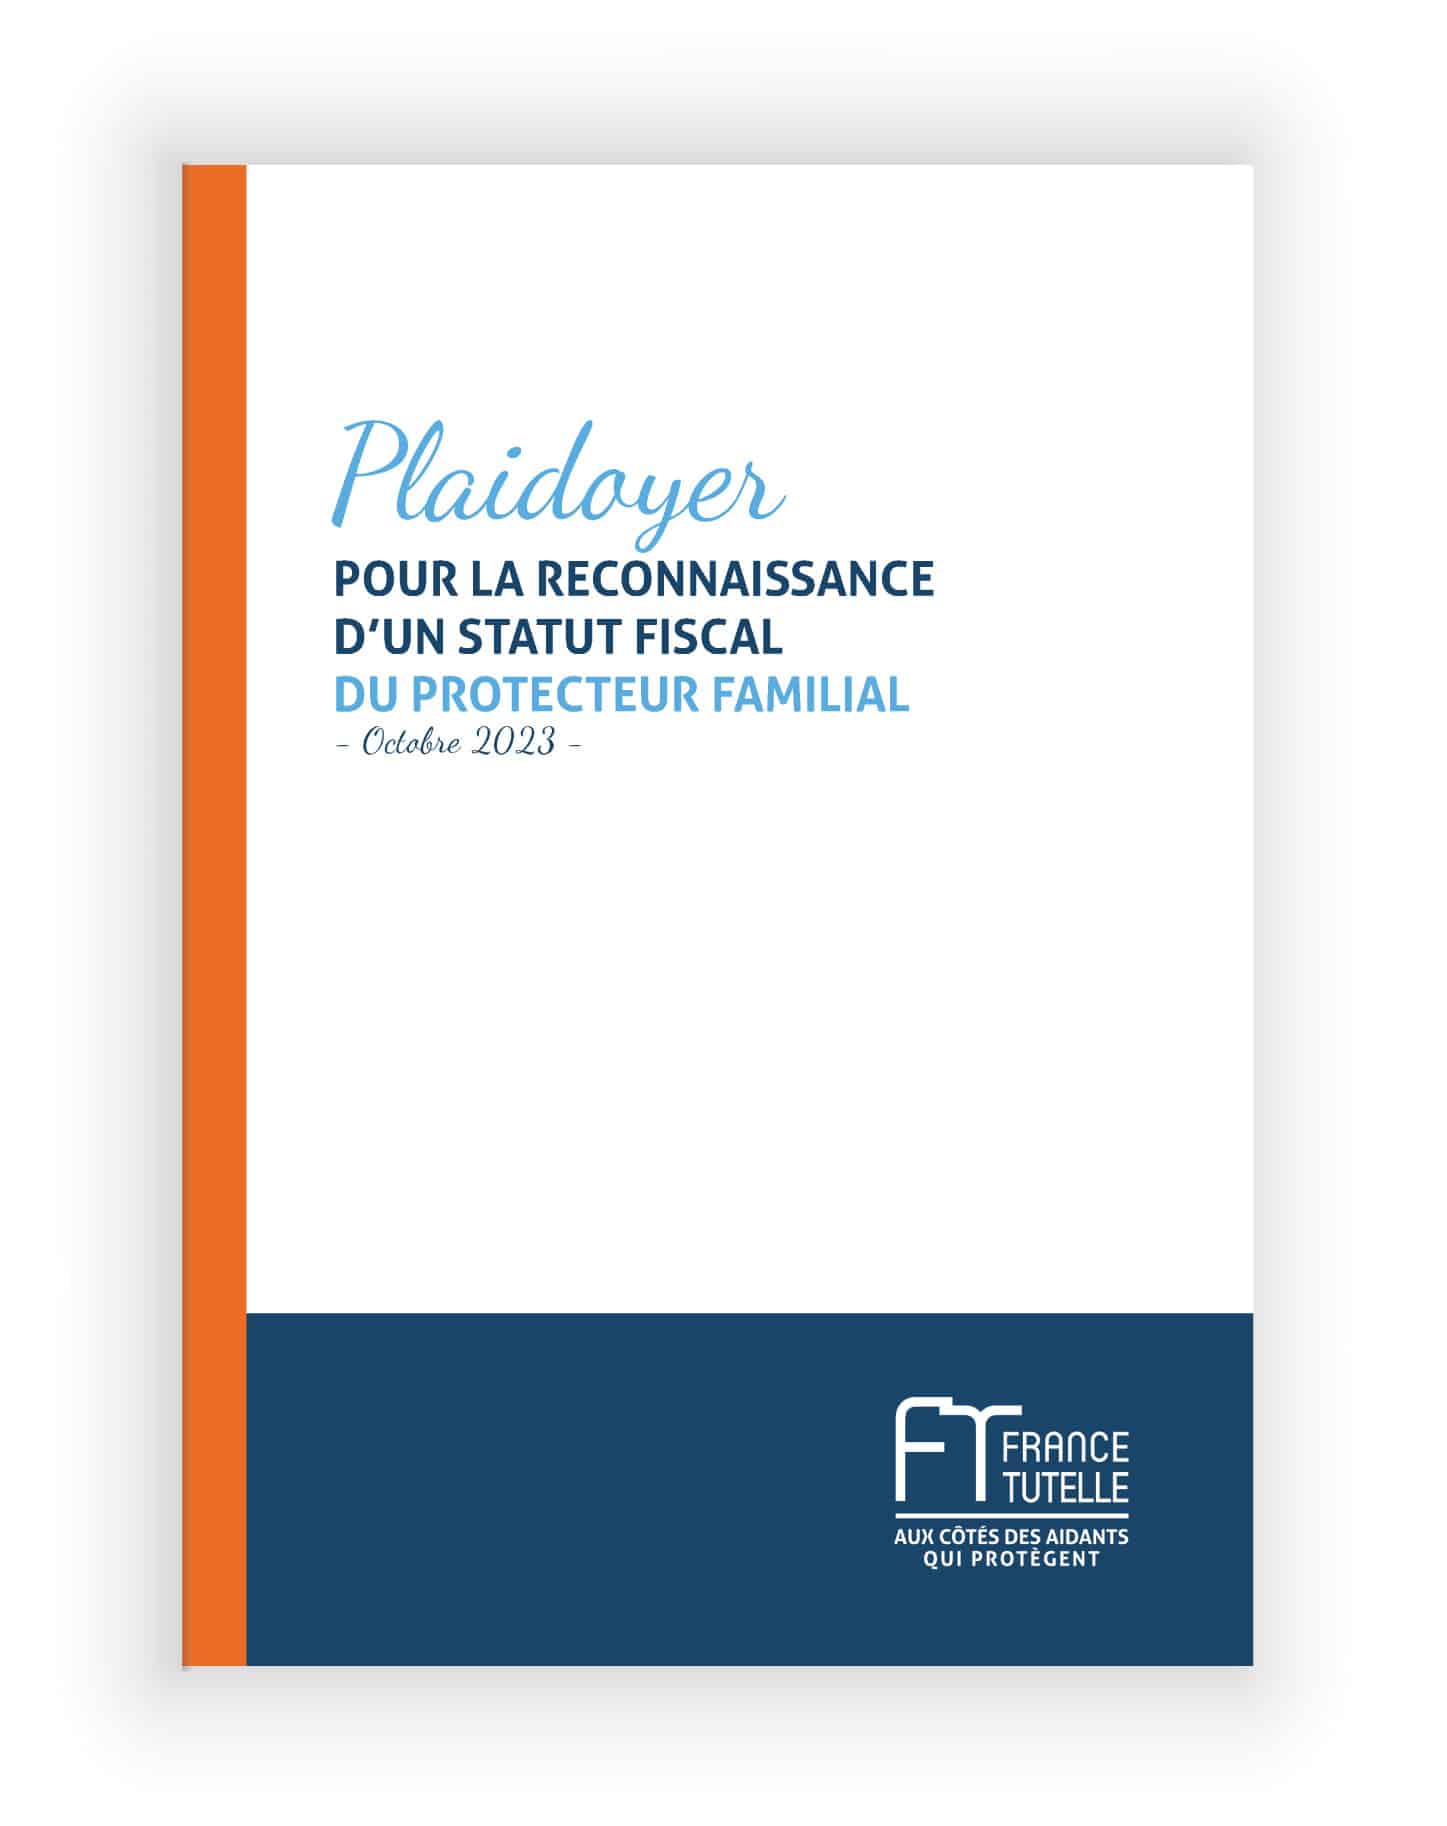 Plaidoyer 2023 - Fiscal - France TUTELLE